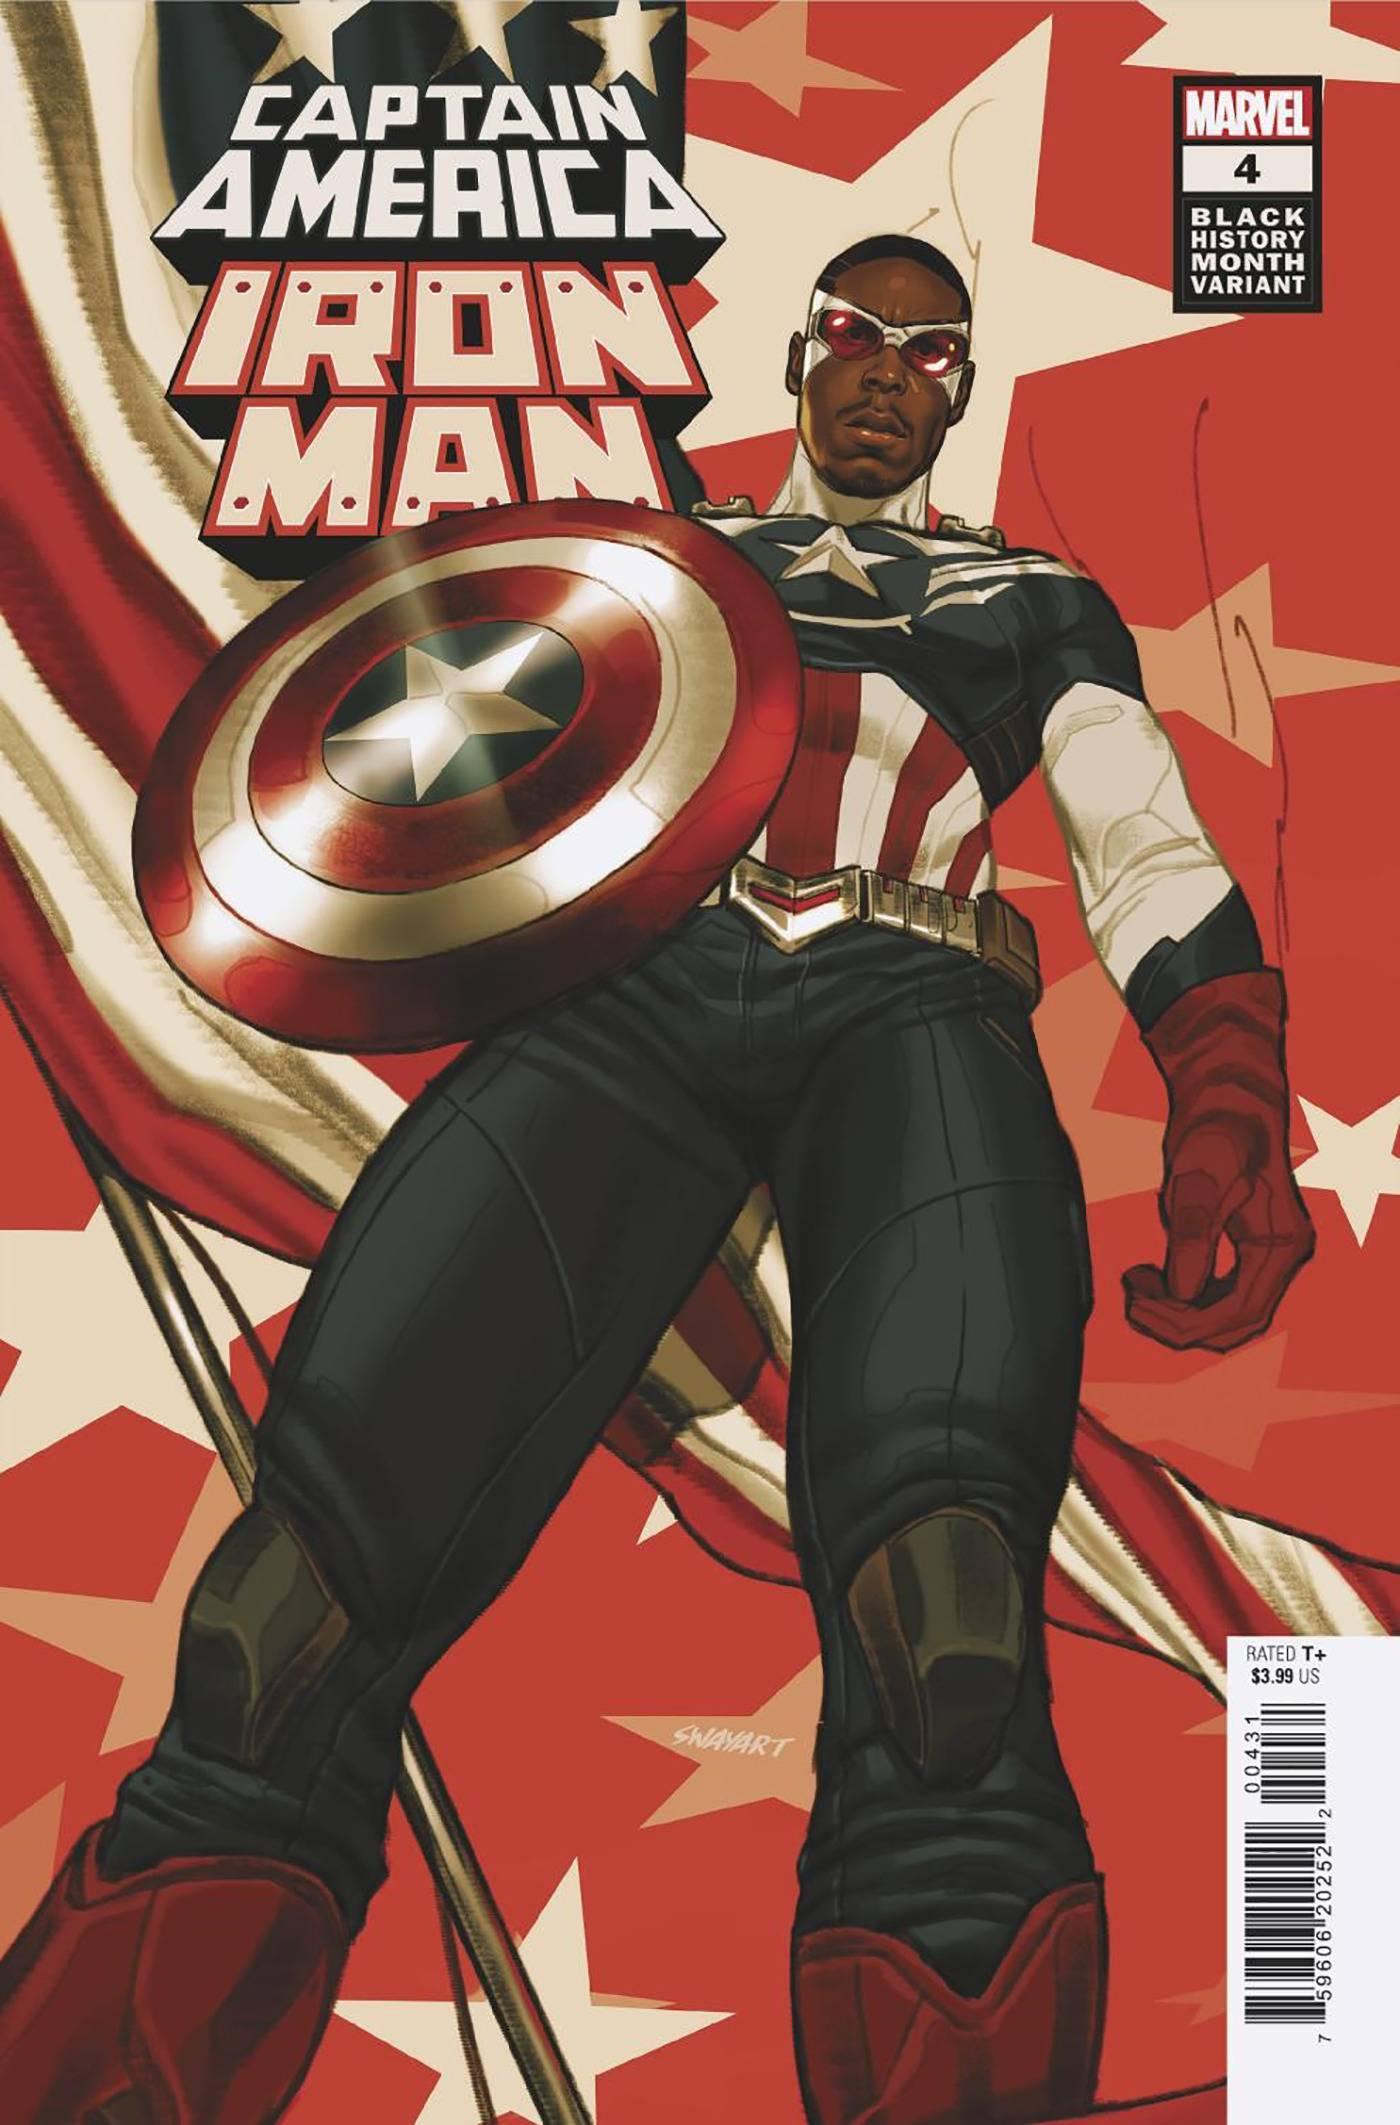 CAPTAIN AMERICA IRON MAN #4 BLACK HISTORY MONTH VAR - Kings Comics